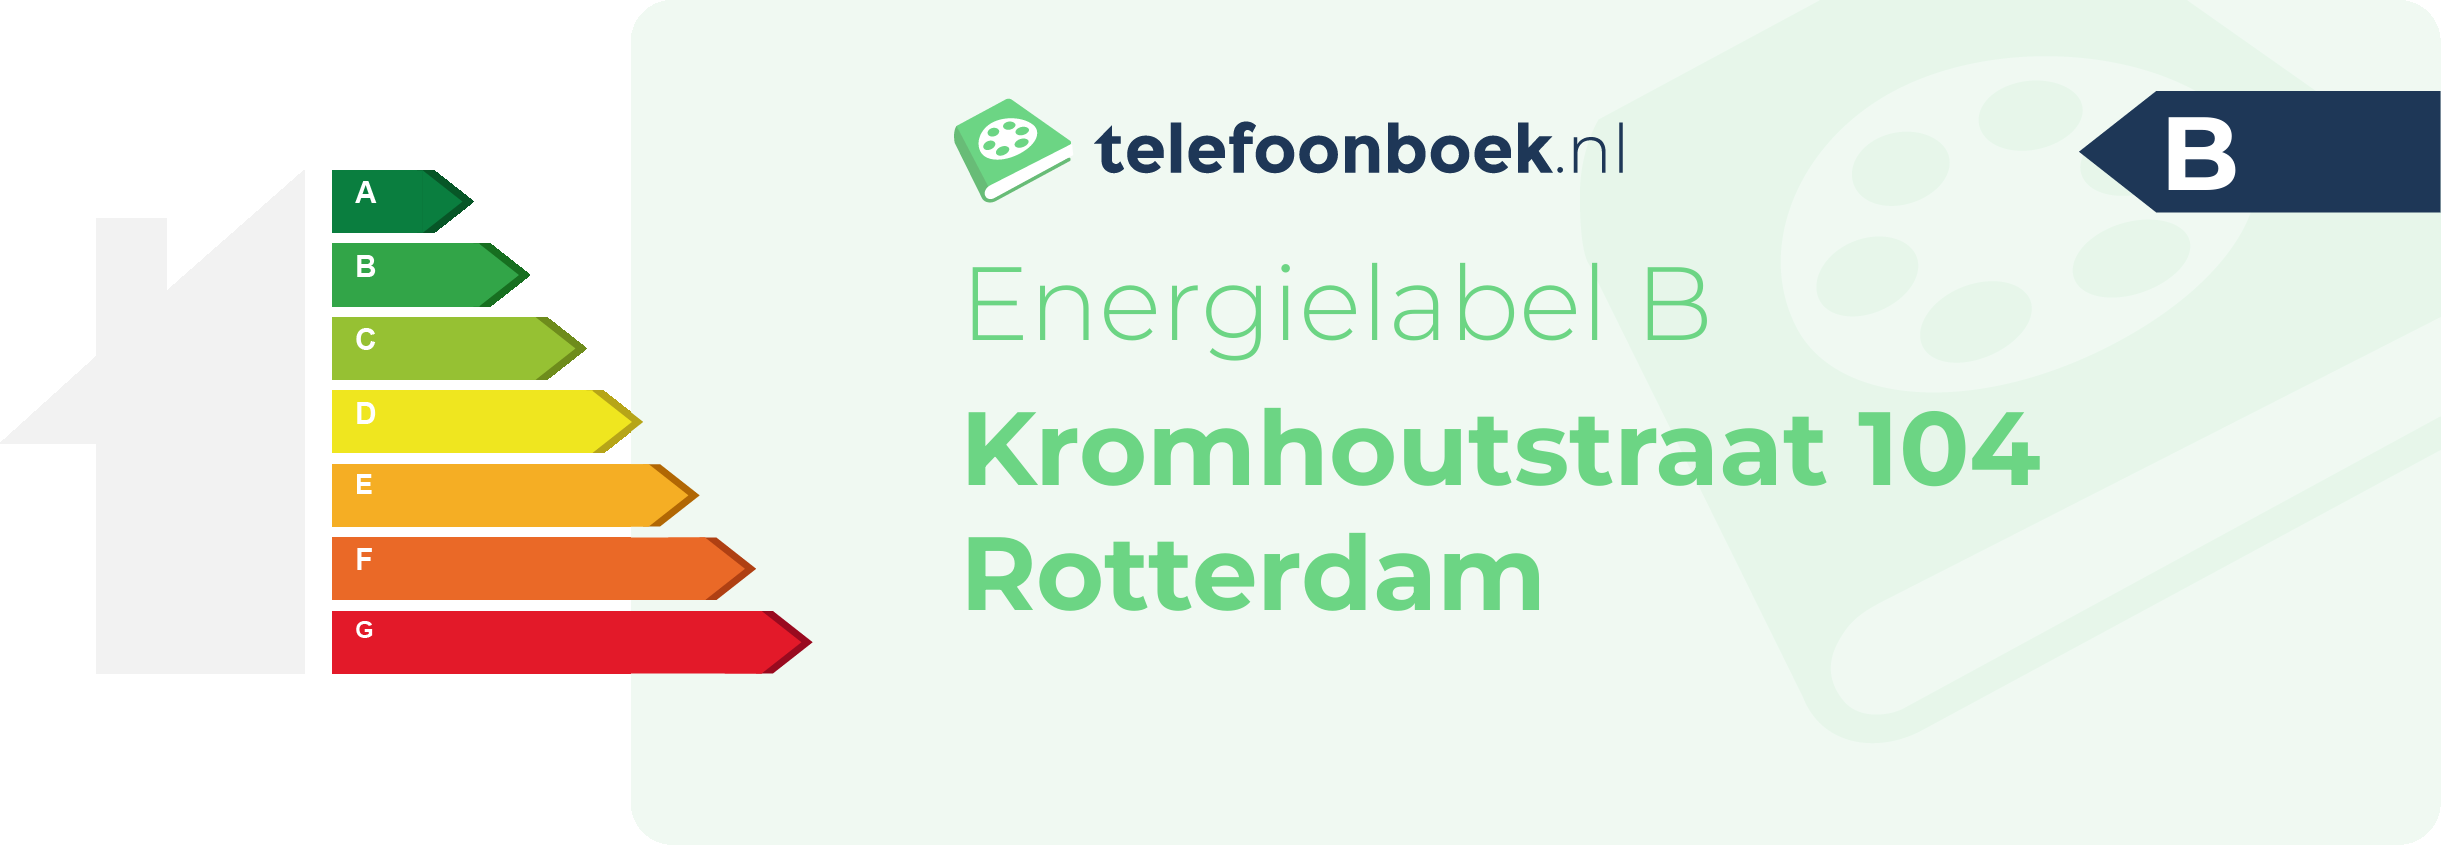 Energielabel Kromhoutstraat 104 Rotterdam